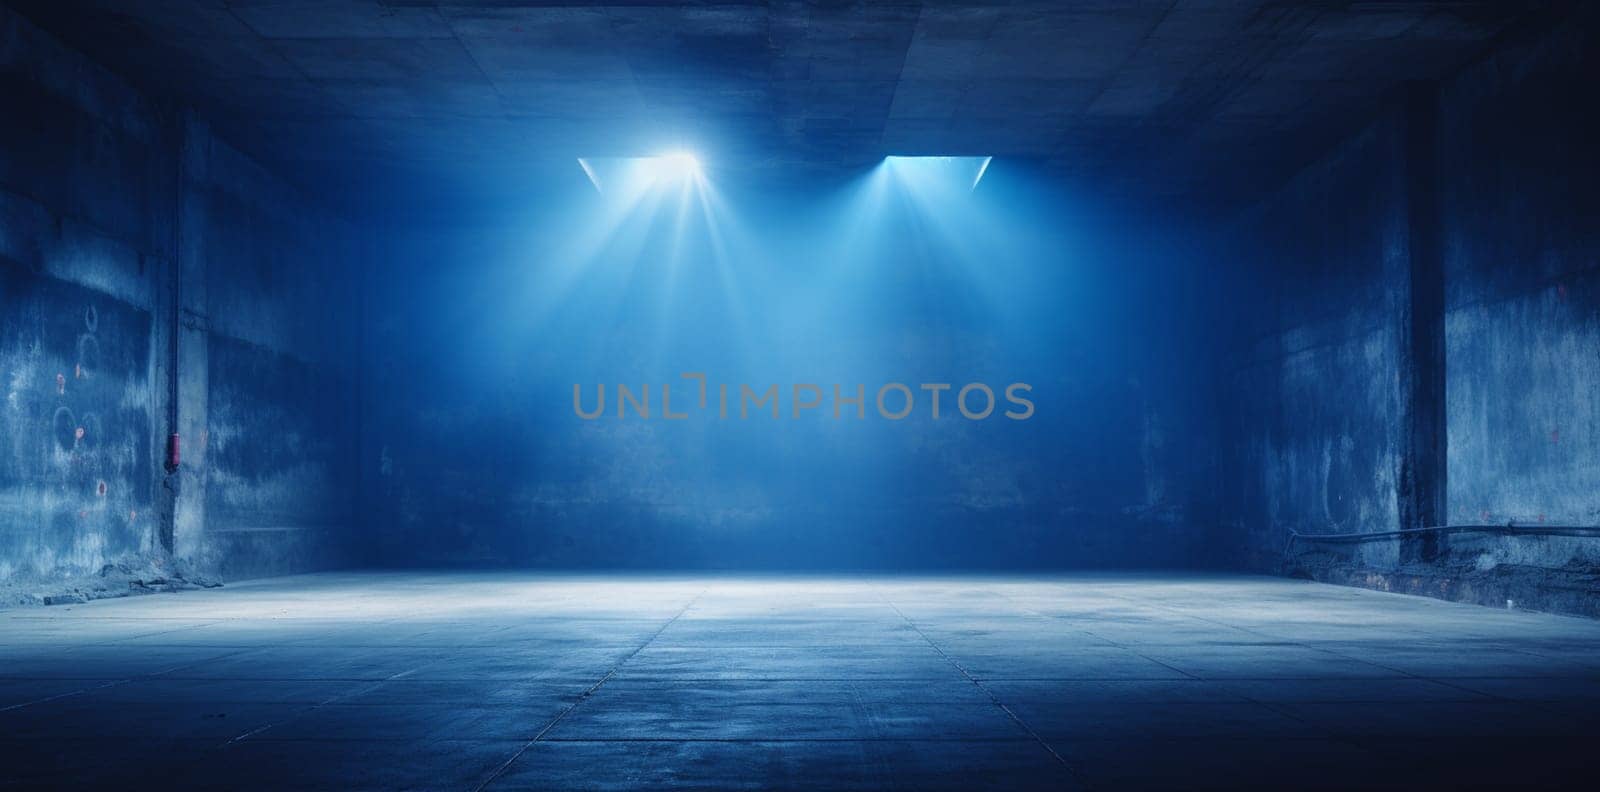 Sci Fi futuristic Neon Blue Concrete Garage Underground Cyber Virtual Lines Pillars Pantone Classic Spaceship Showroom 3D Rendering Illustration by Andelov13